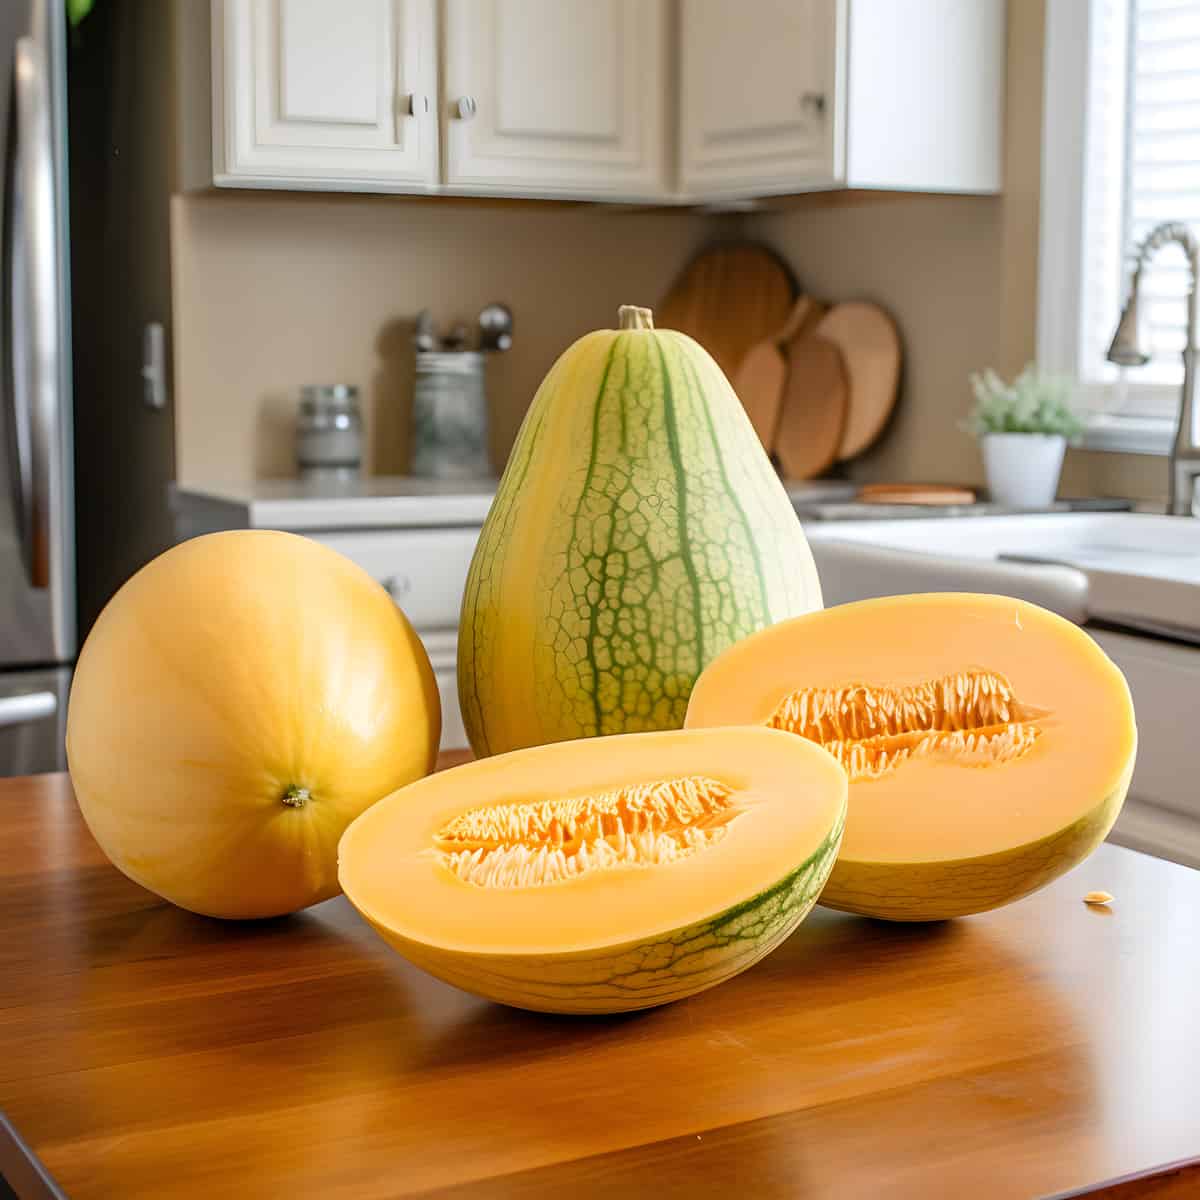 Crenshaw Melon on a kitchen counter